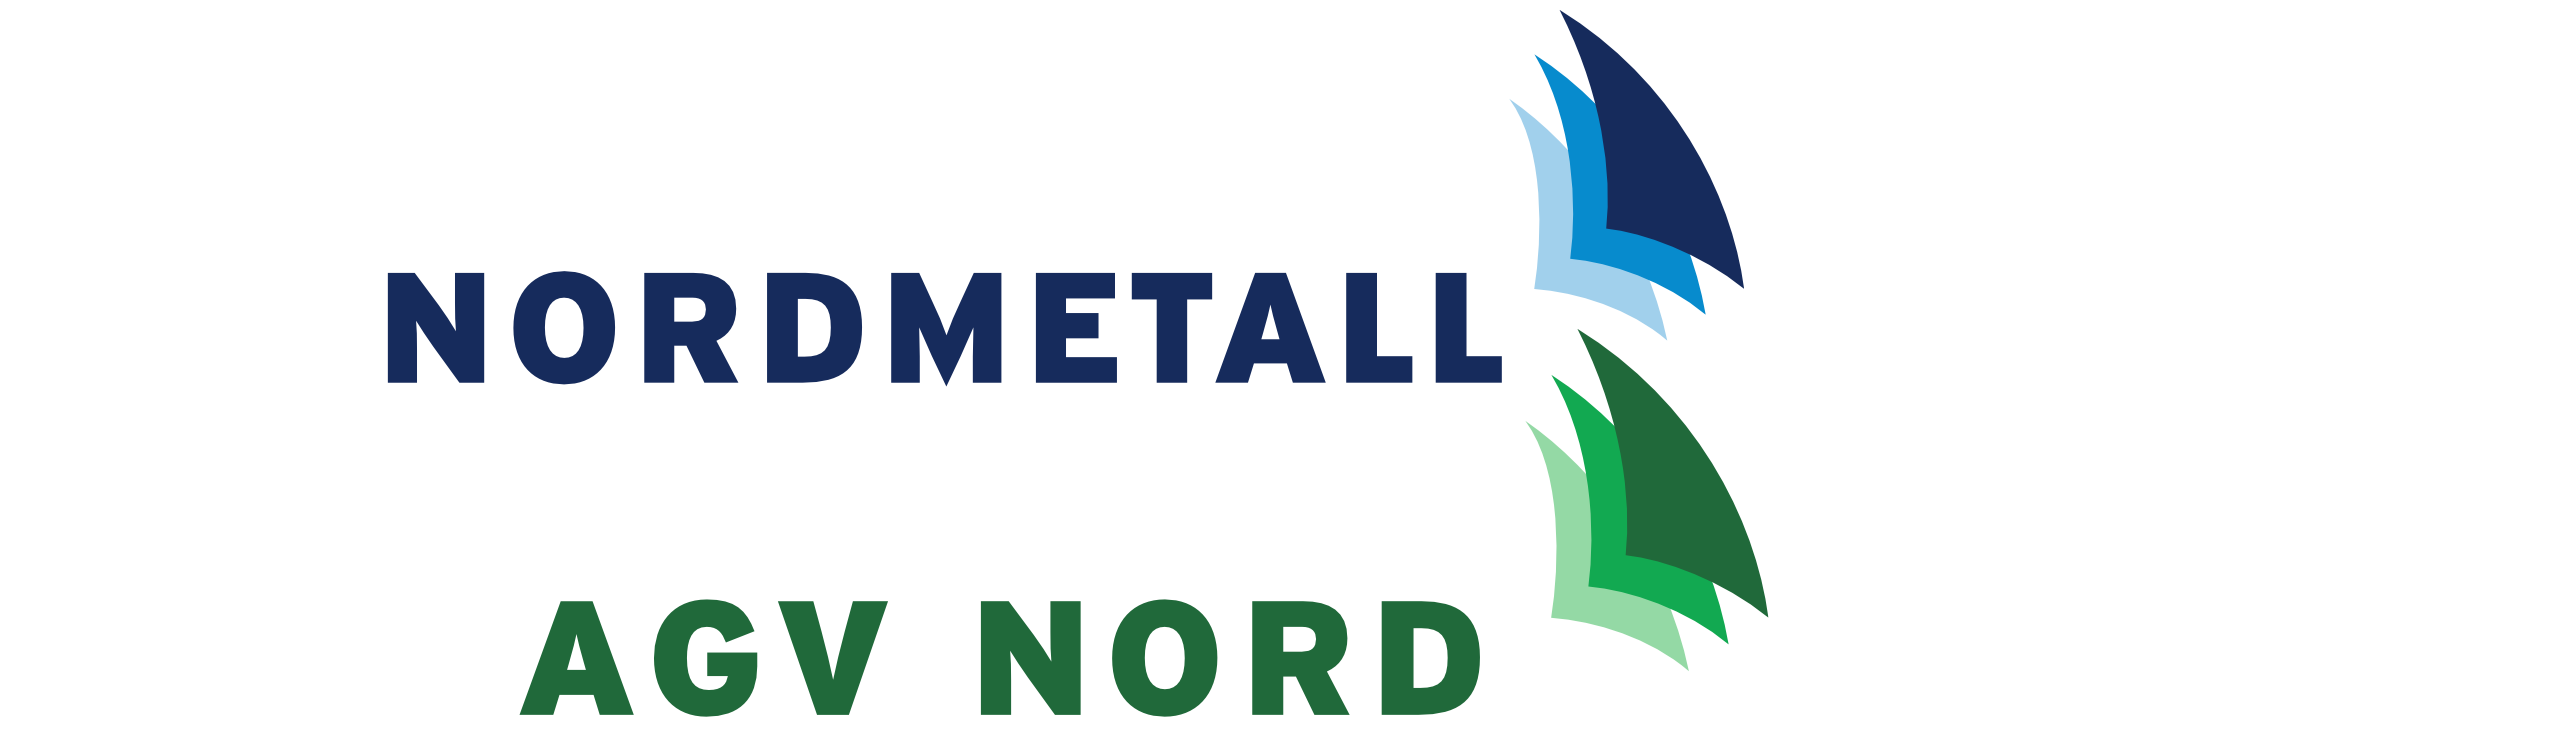 Nordmetall AGV Nord